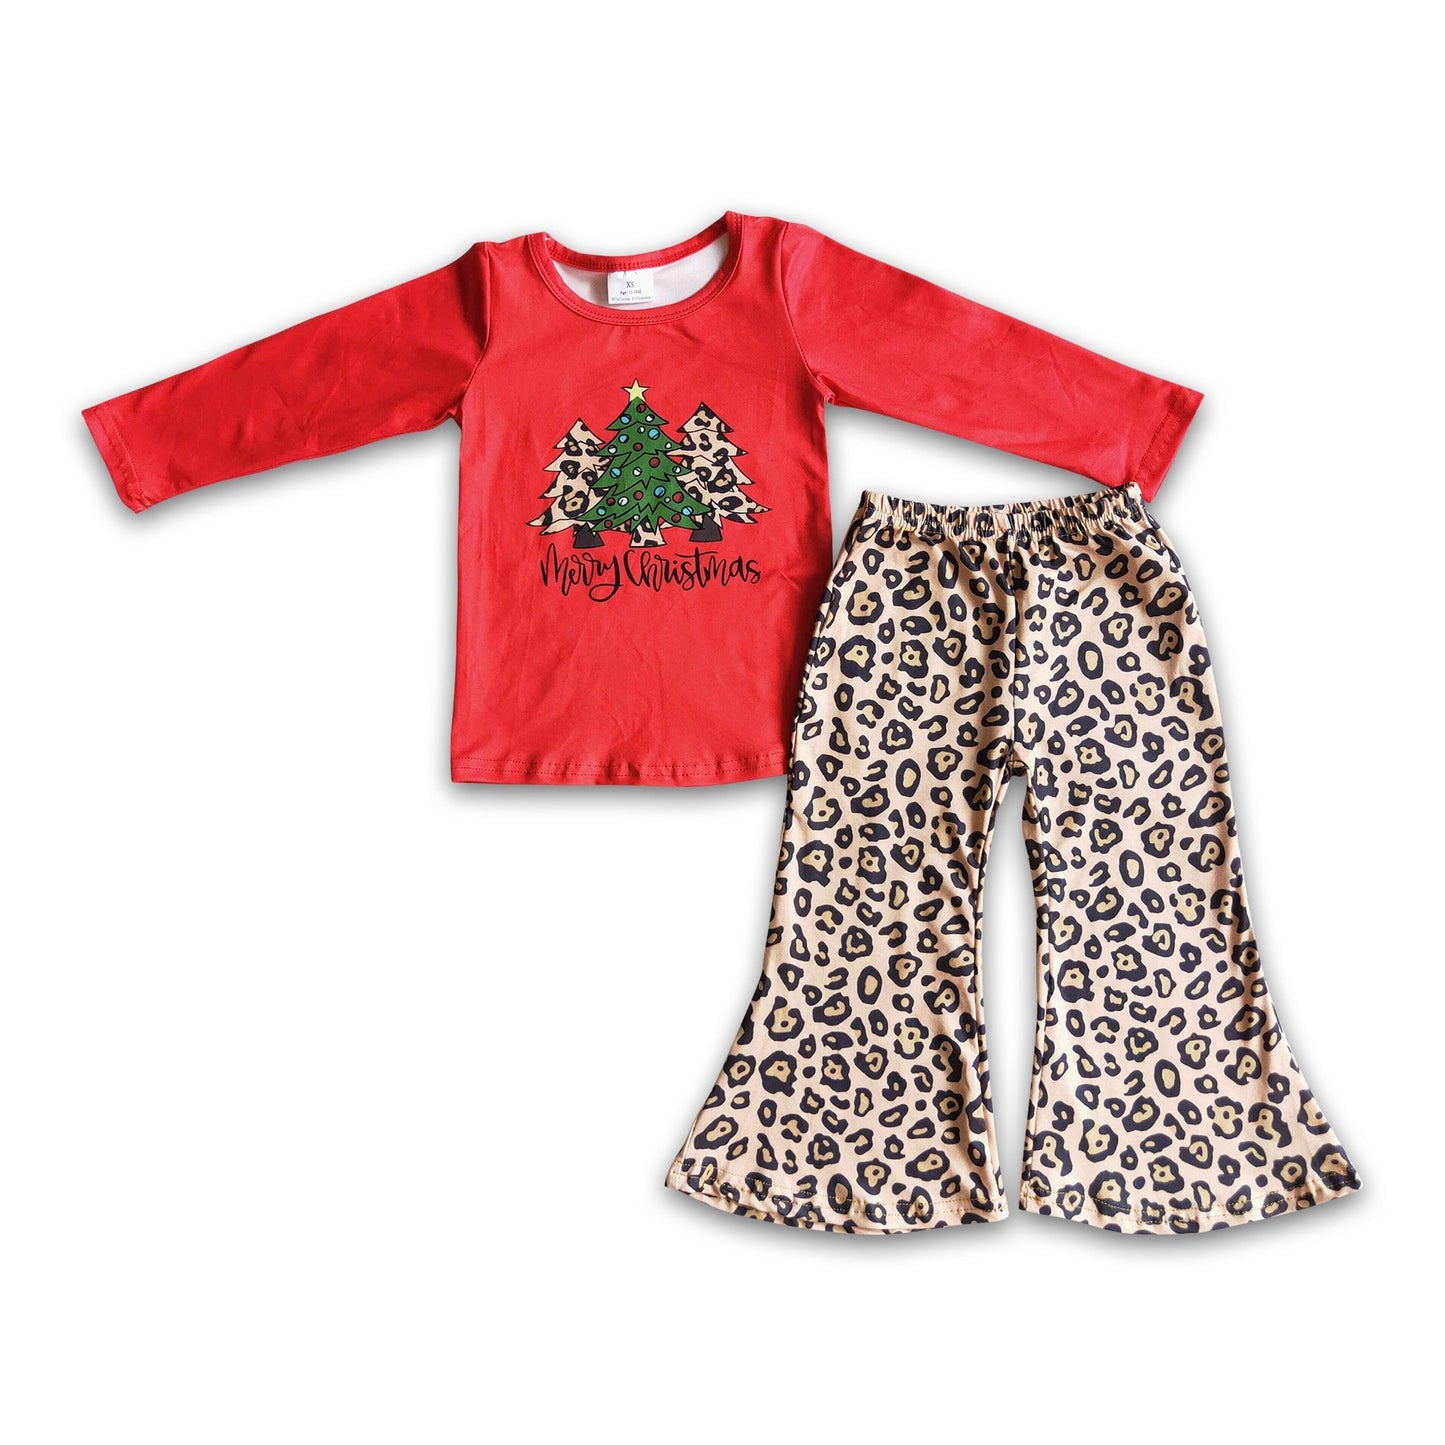 Merry Christmas tree print leopard pants girls clothing